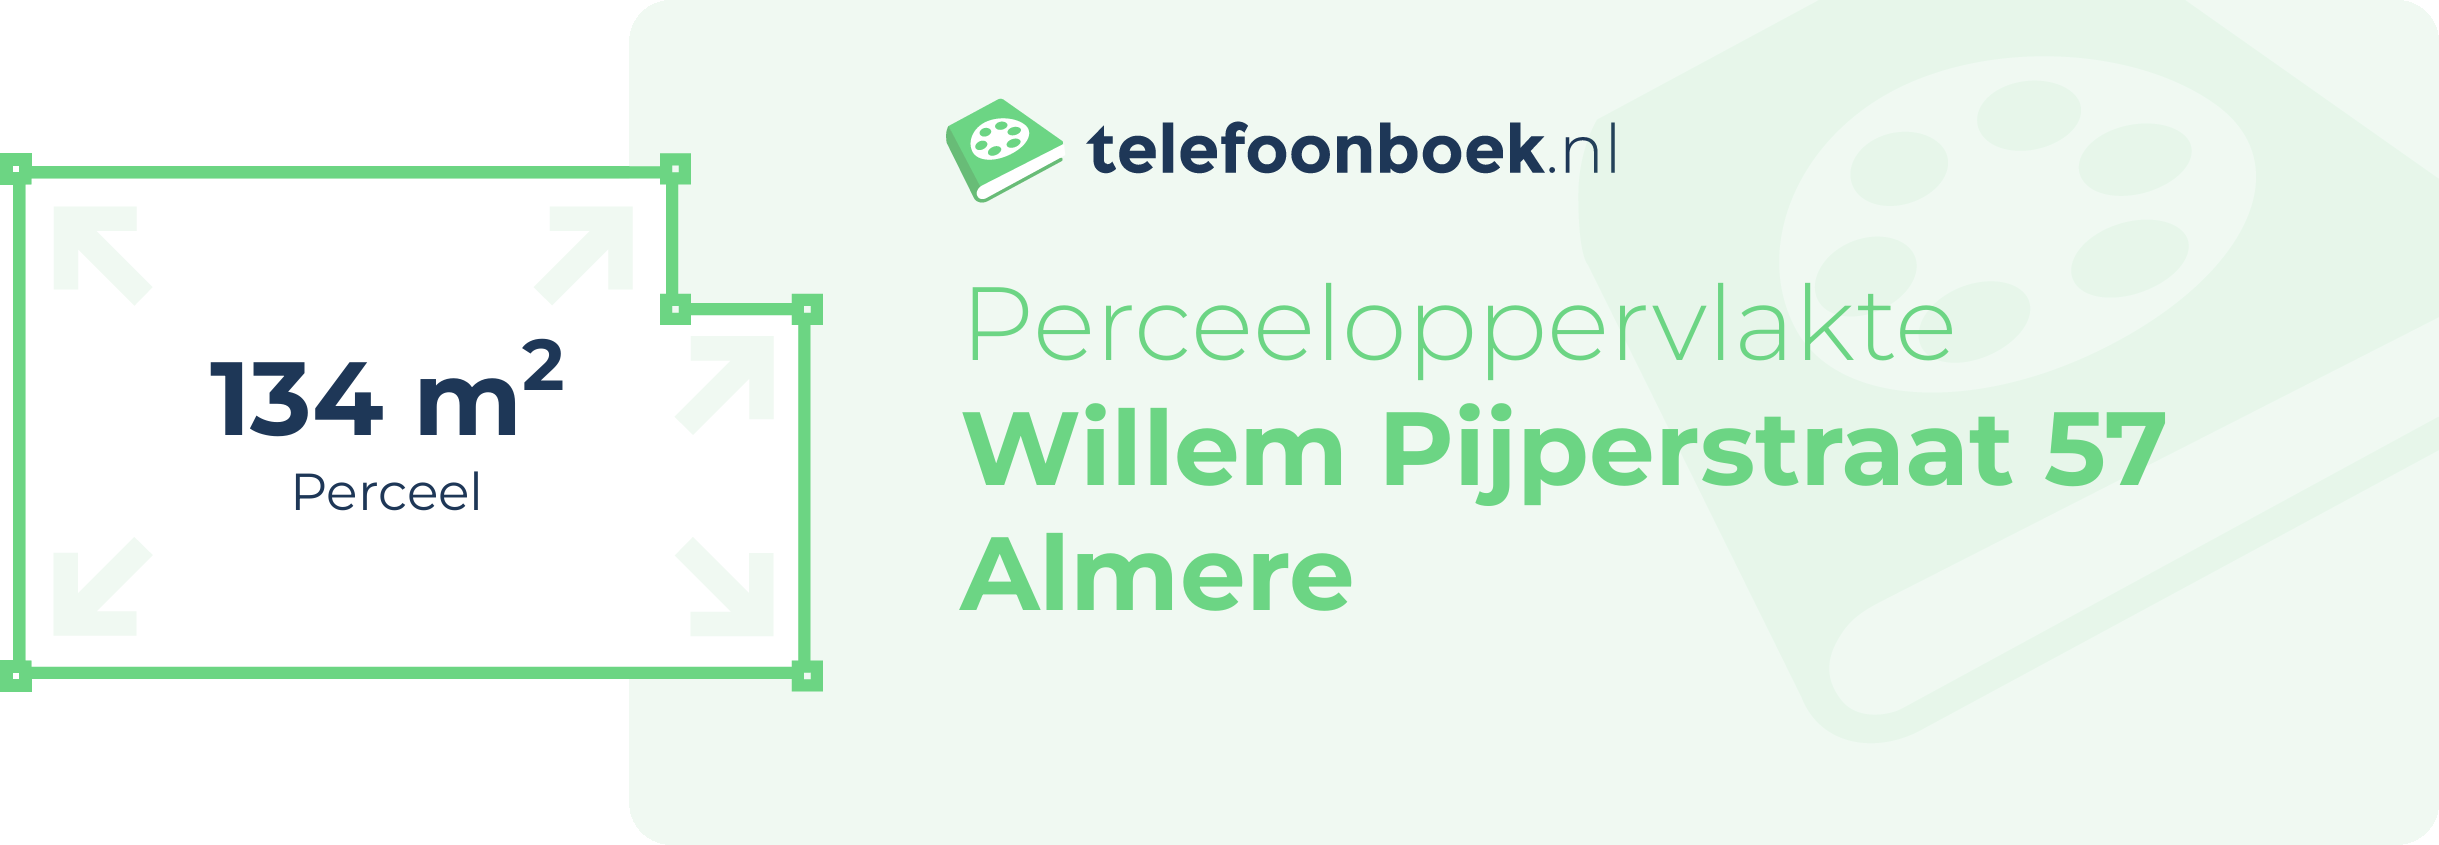 Perceeloppervlakte Willem Pijperstraat 57 Almere